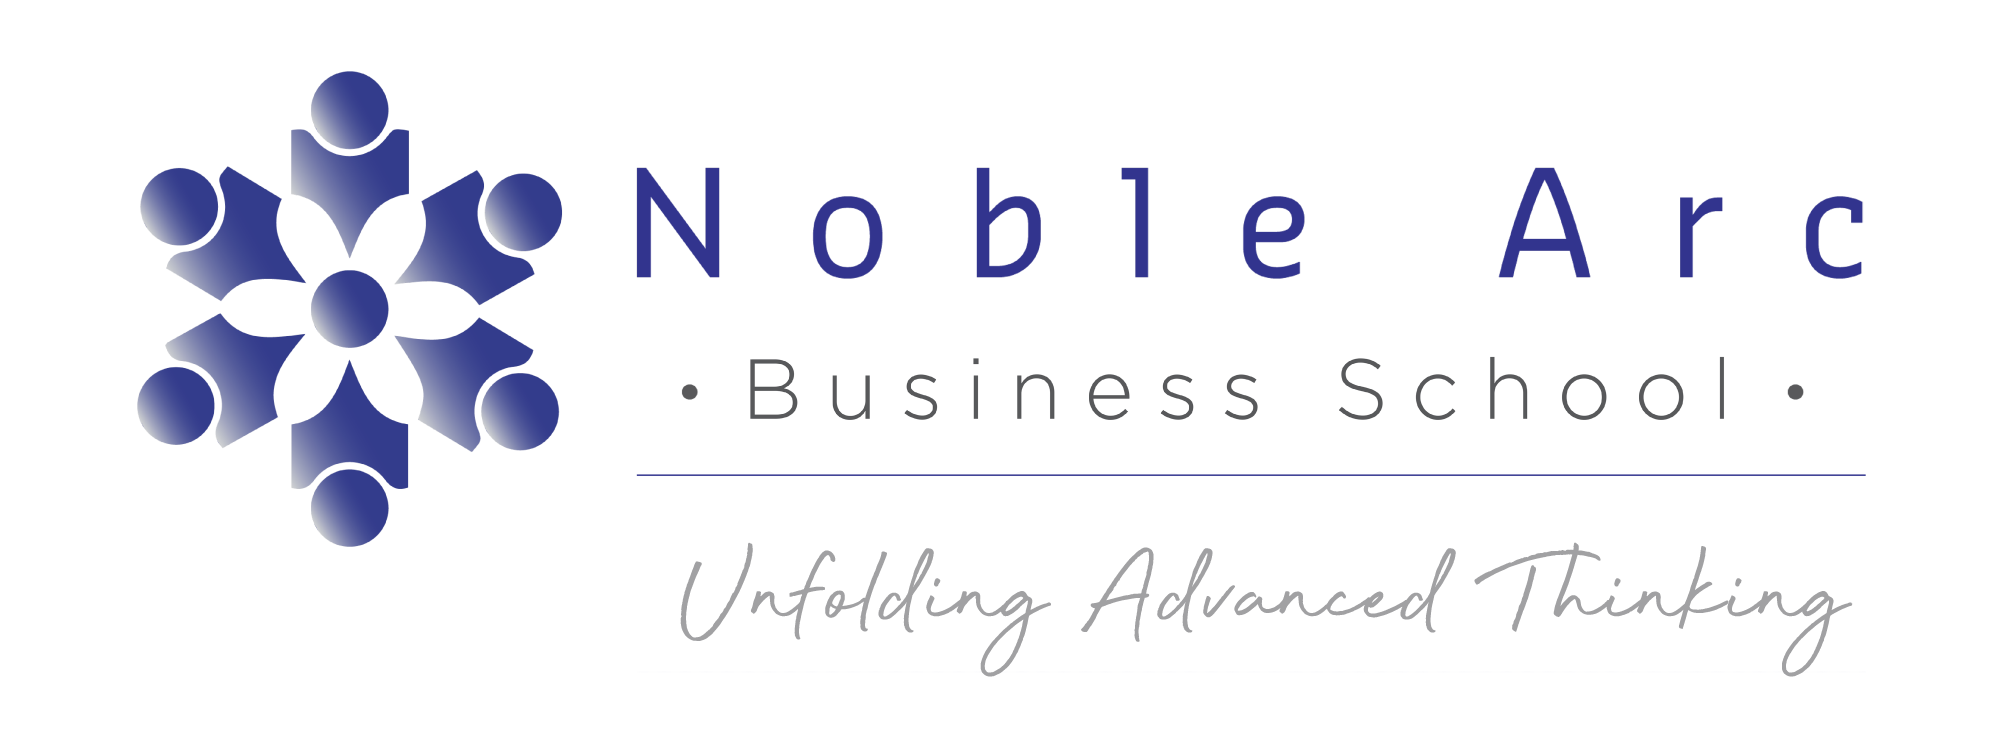 Noble Arc Business School